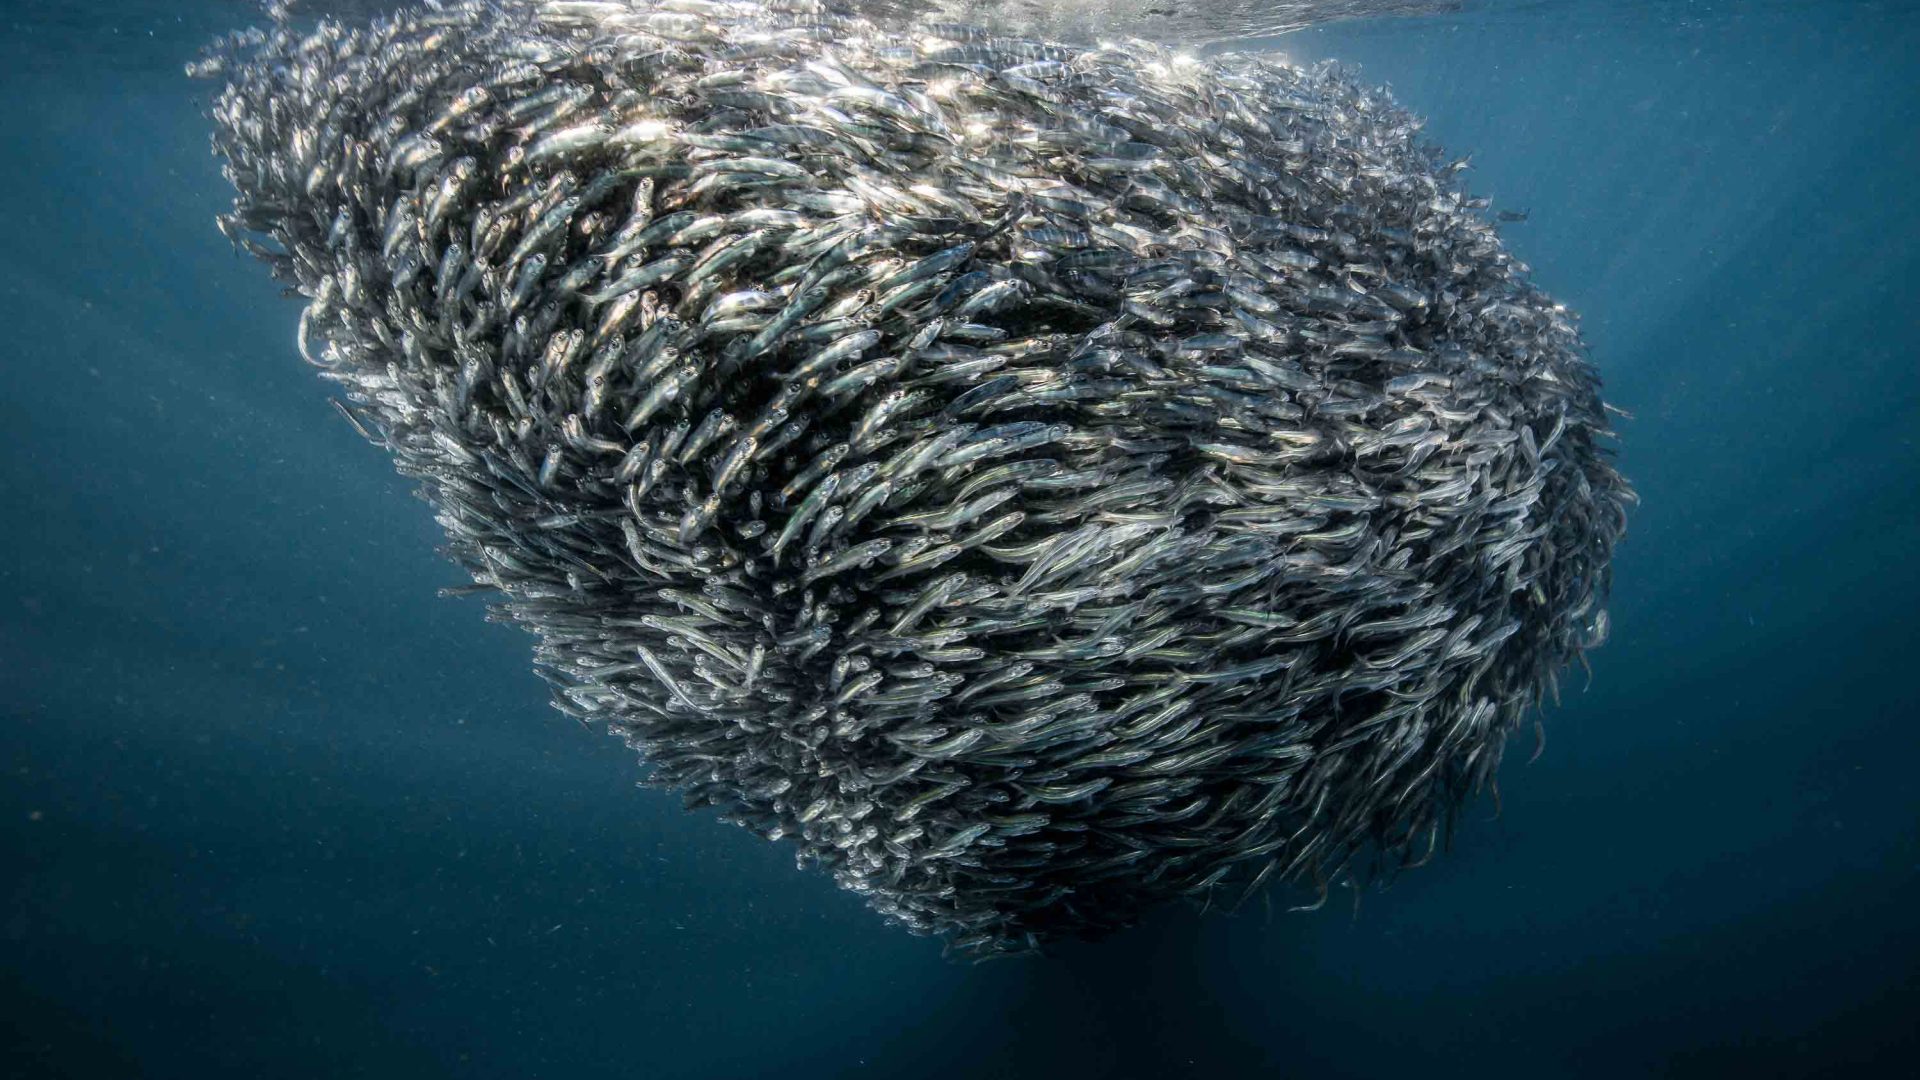 A school of circling sardines.